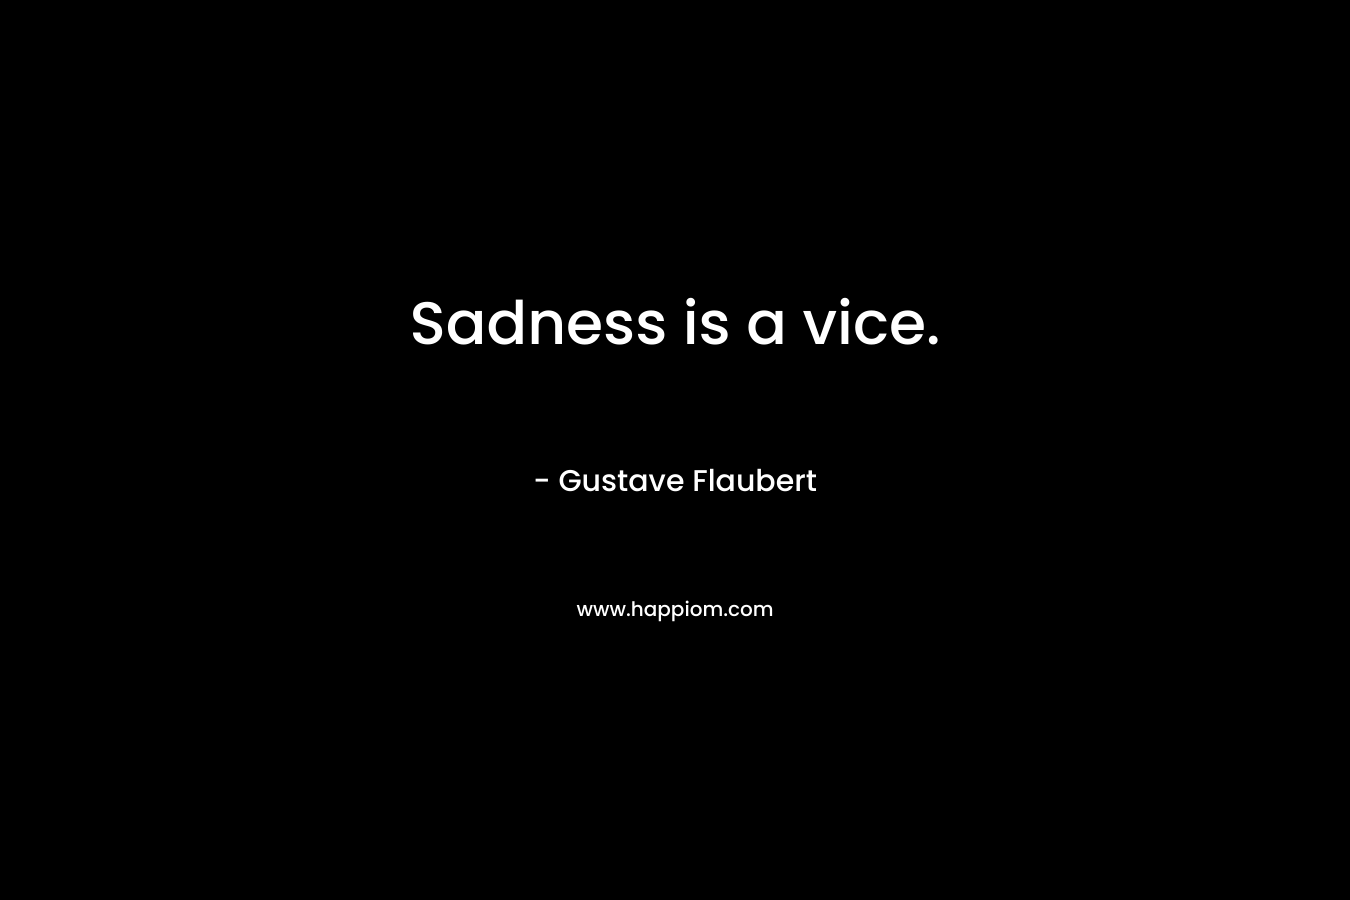 Sadness is a vice.